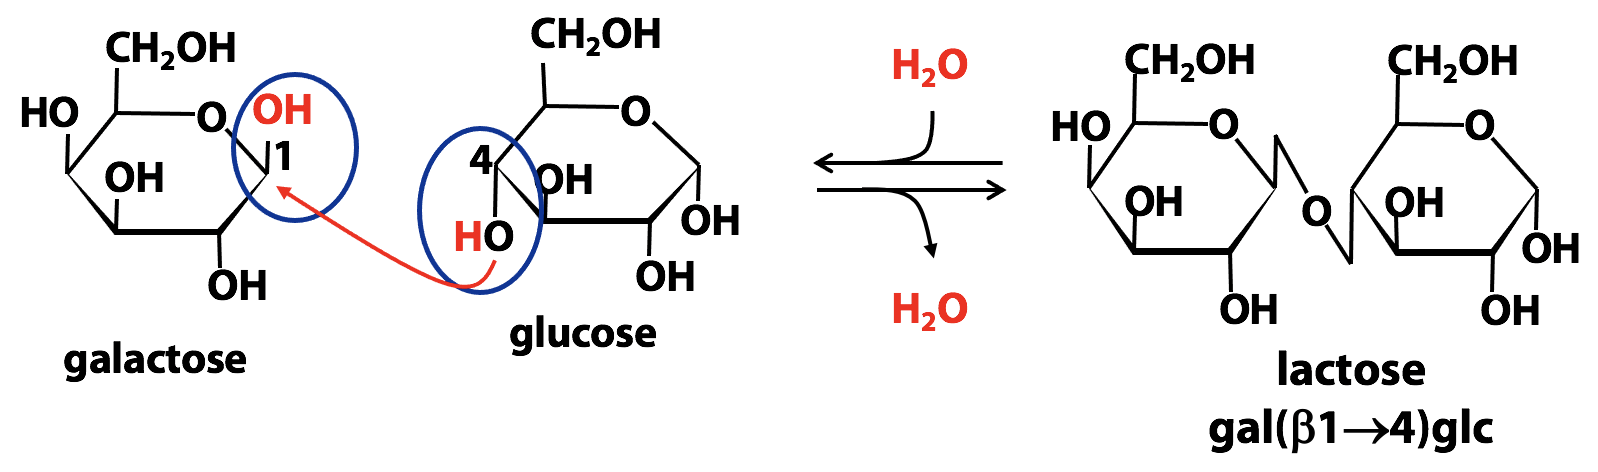 simple sugar molecule structure